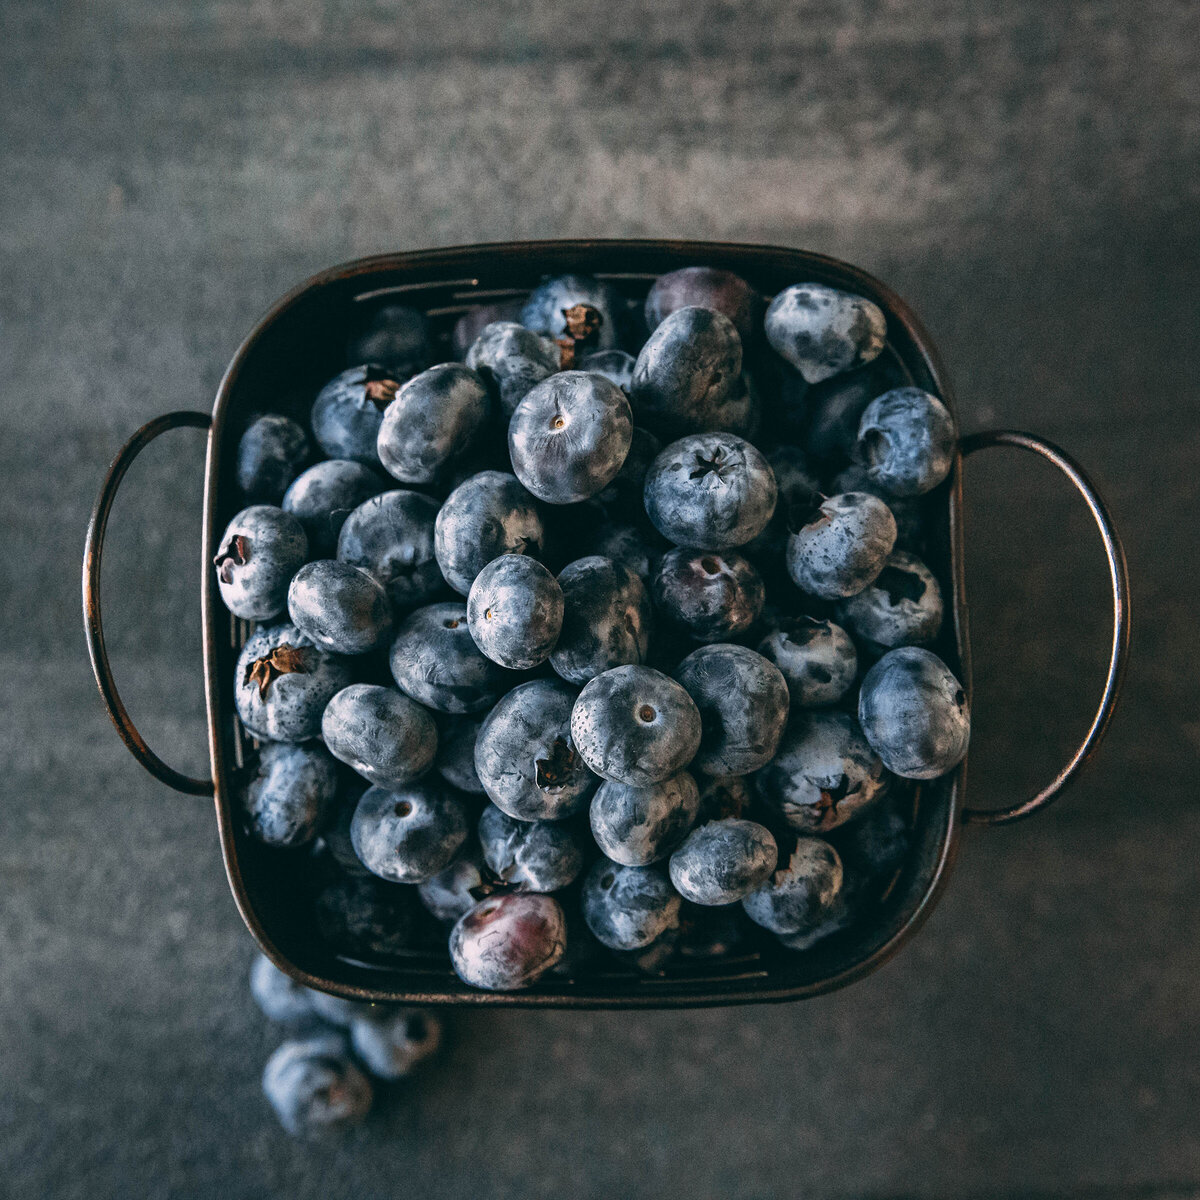 Driscoll's Berries Blueberry Bucket by Nancy Ingersoll in Watsonville, California